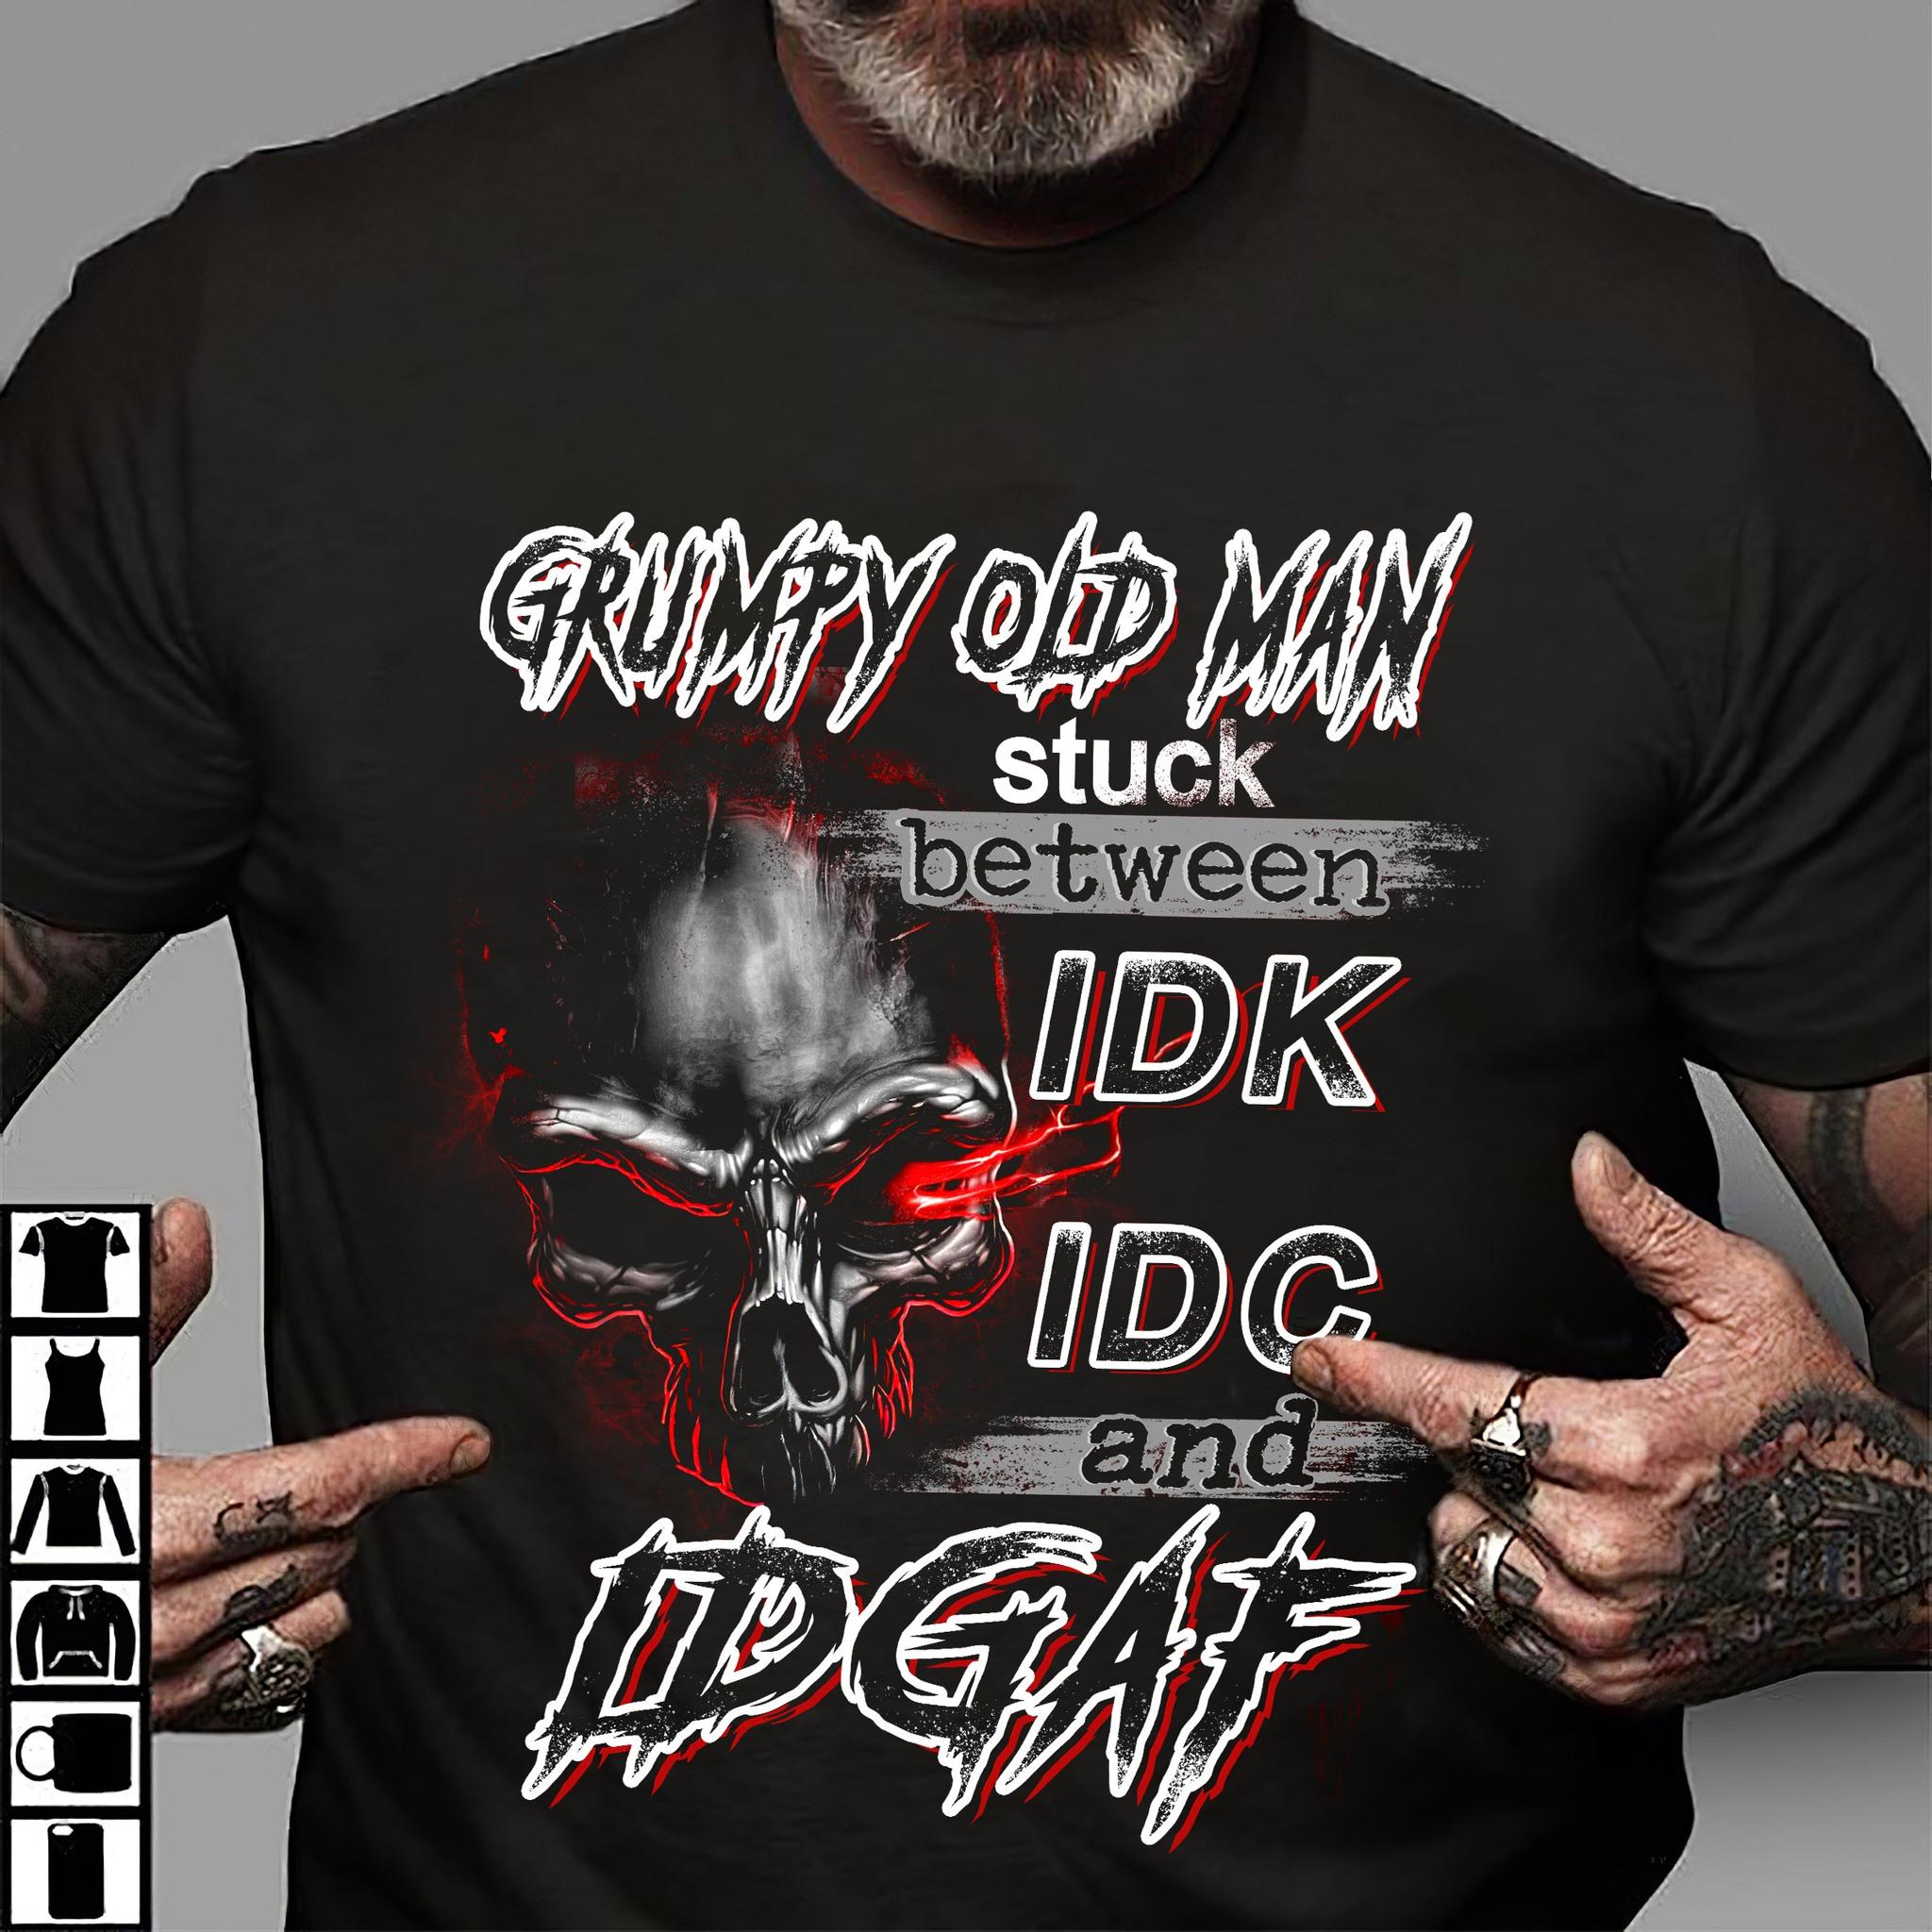 Grumpy old man stuck between IDK IDC and IDGAF - Black skull cap, Halloween skull graphic T-shirt